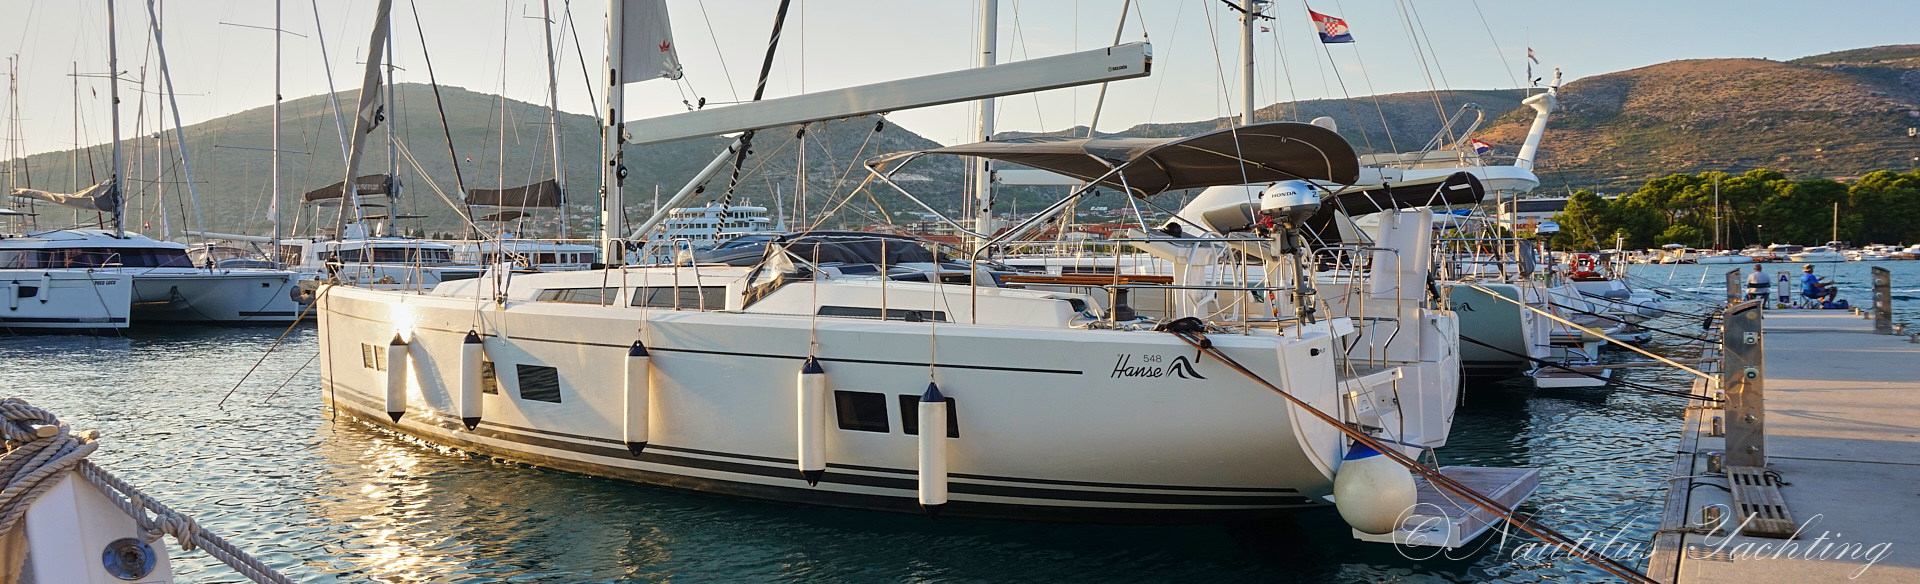 Hanse 548 - Sailing yacht charter holiday in Croatia